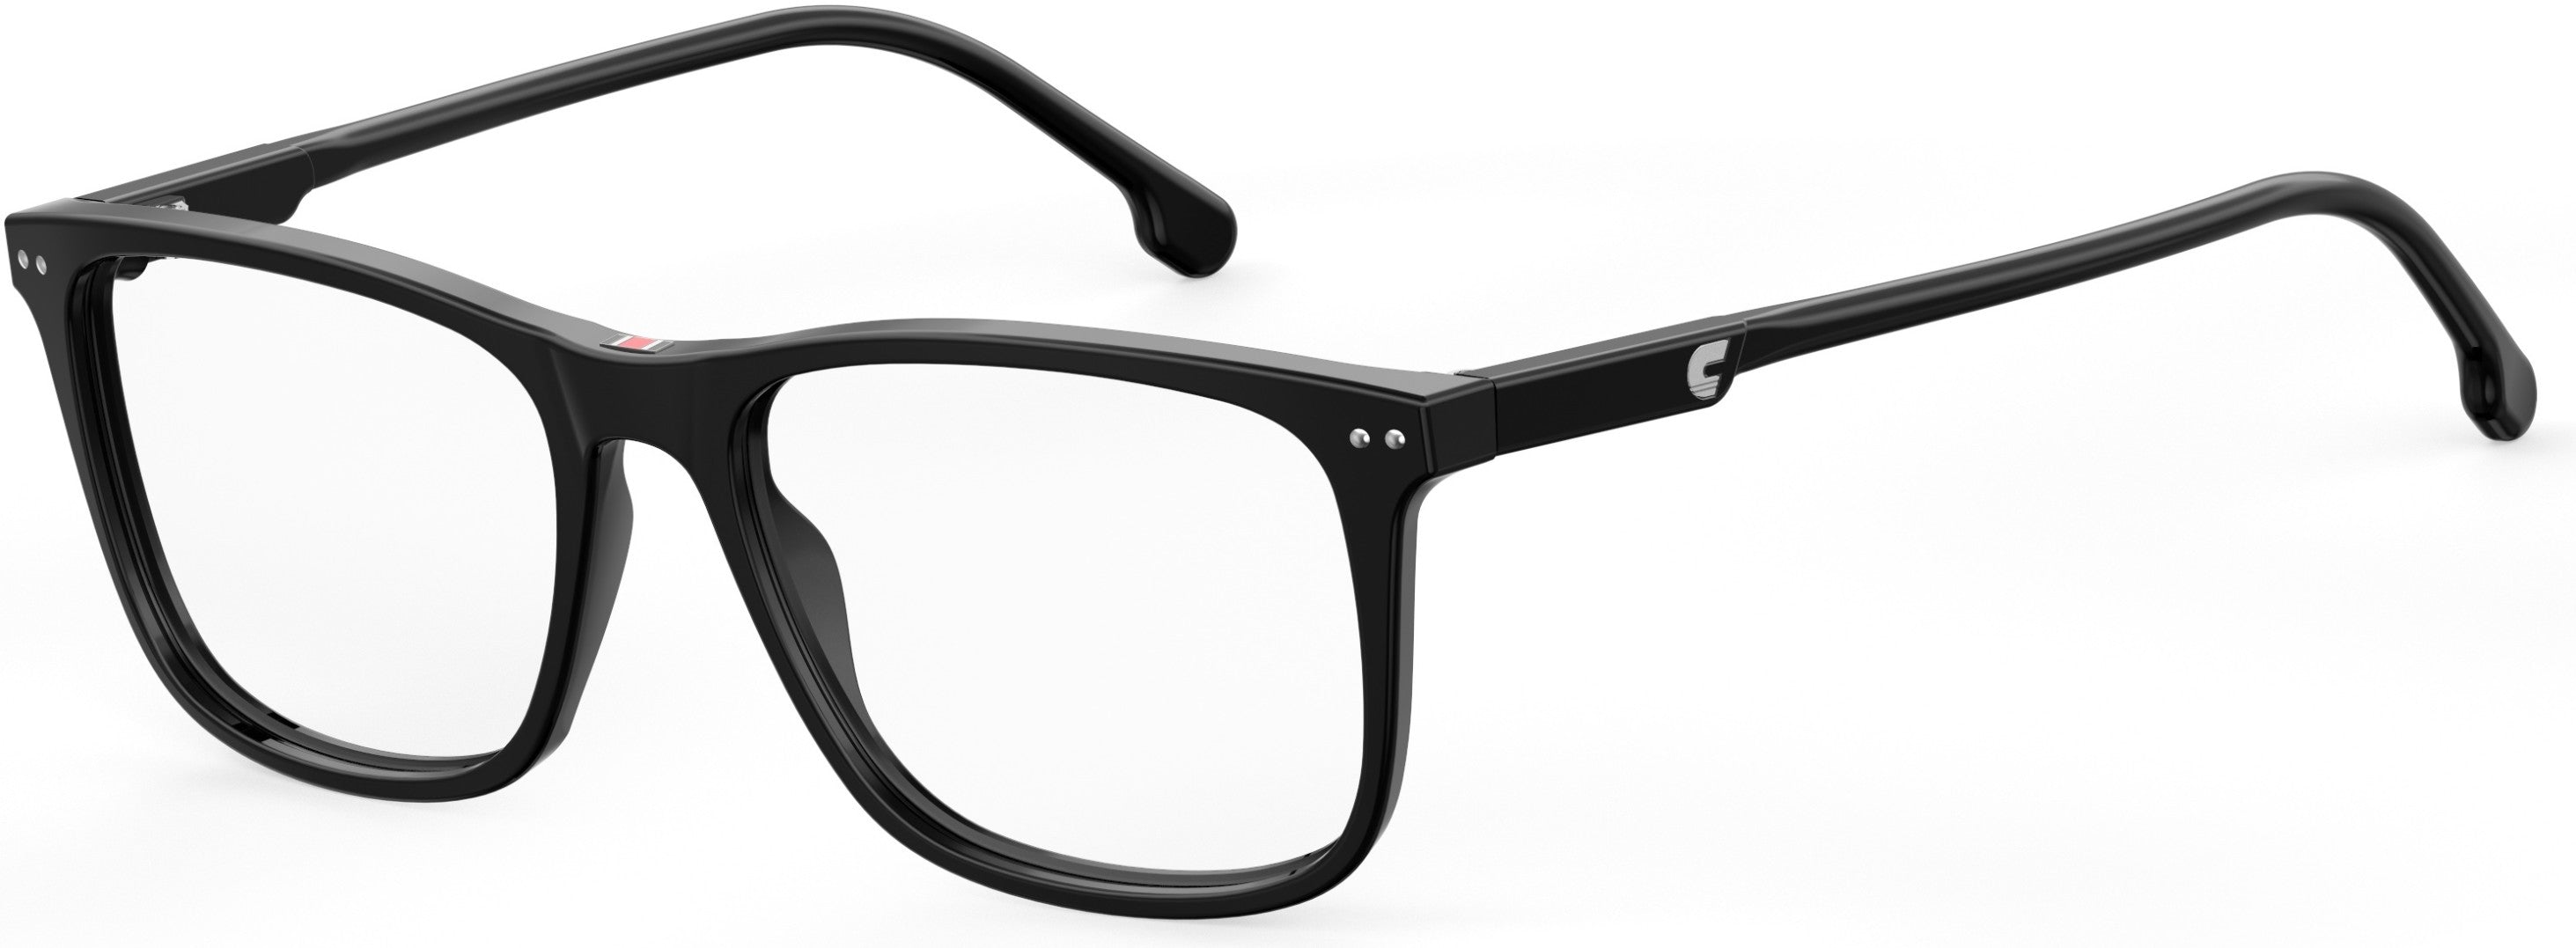  Carrera 2012/T Rectangular Eyeglasses 0807-0807  Black (00 Demo Lens)